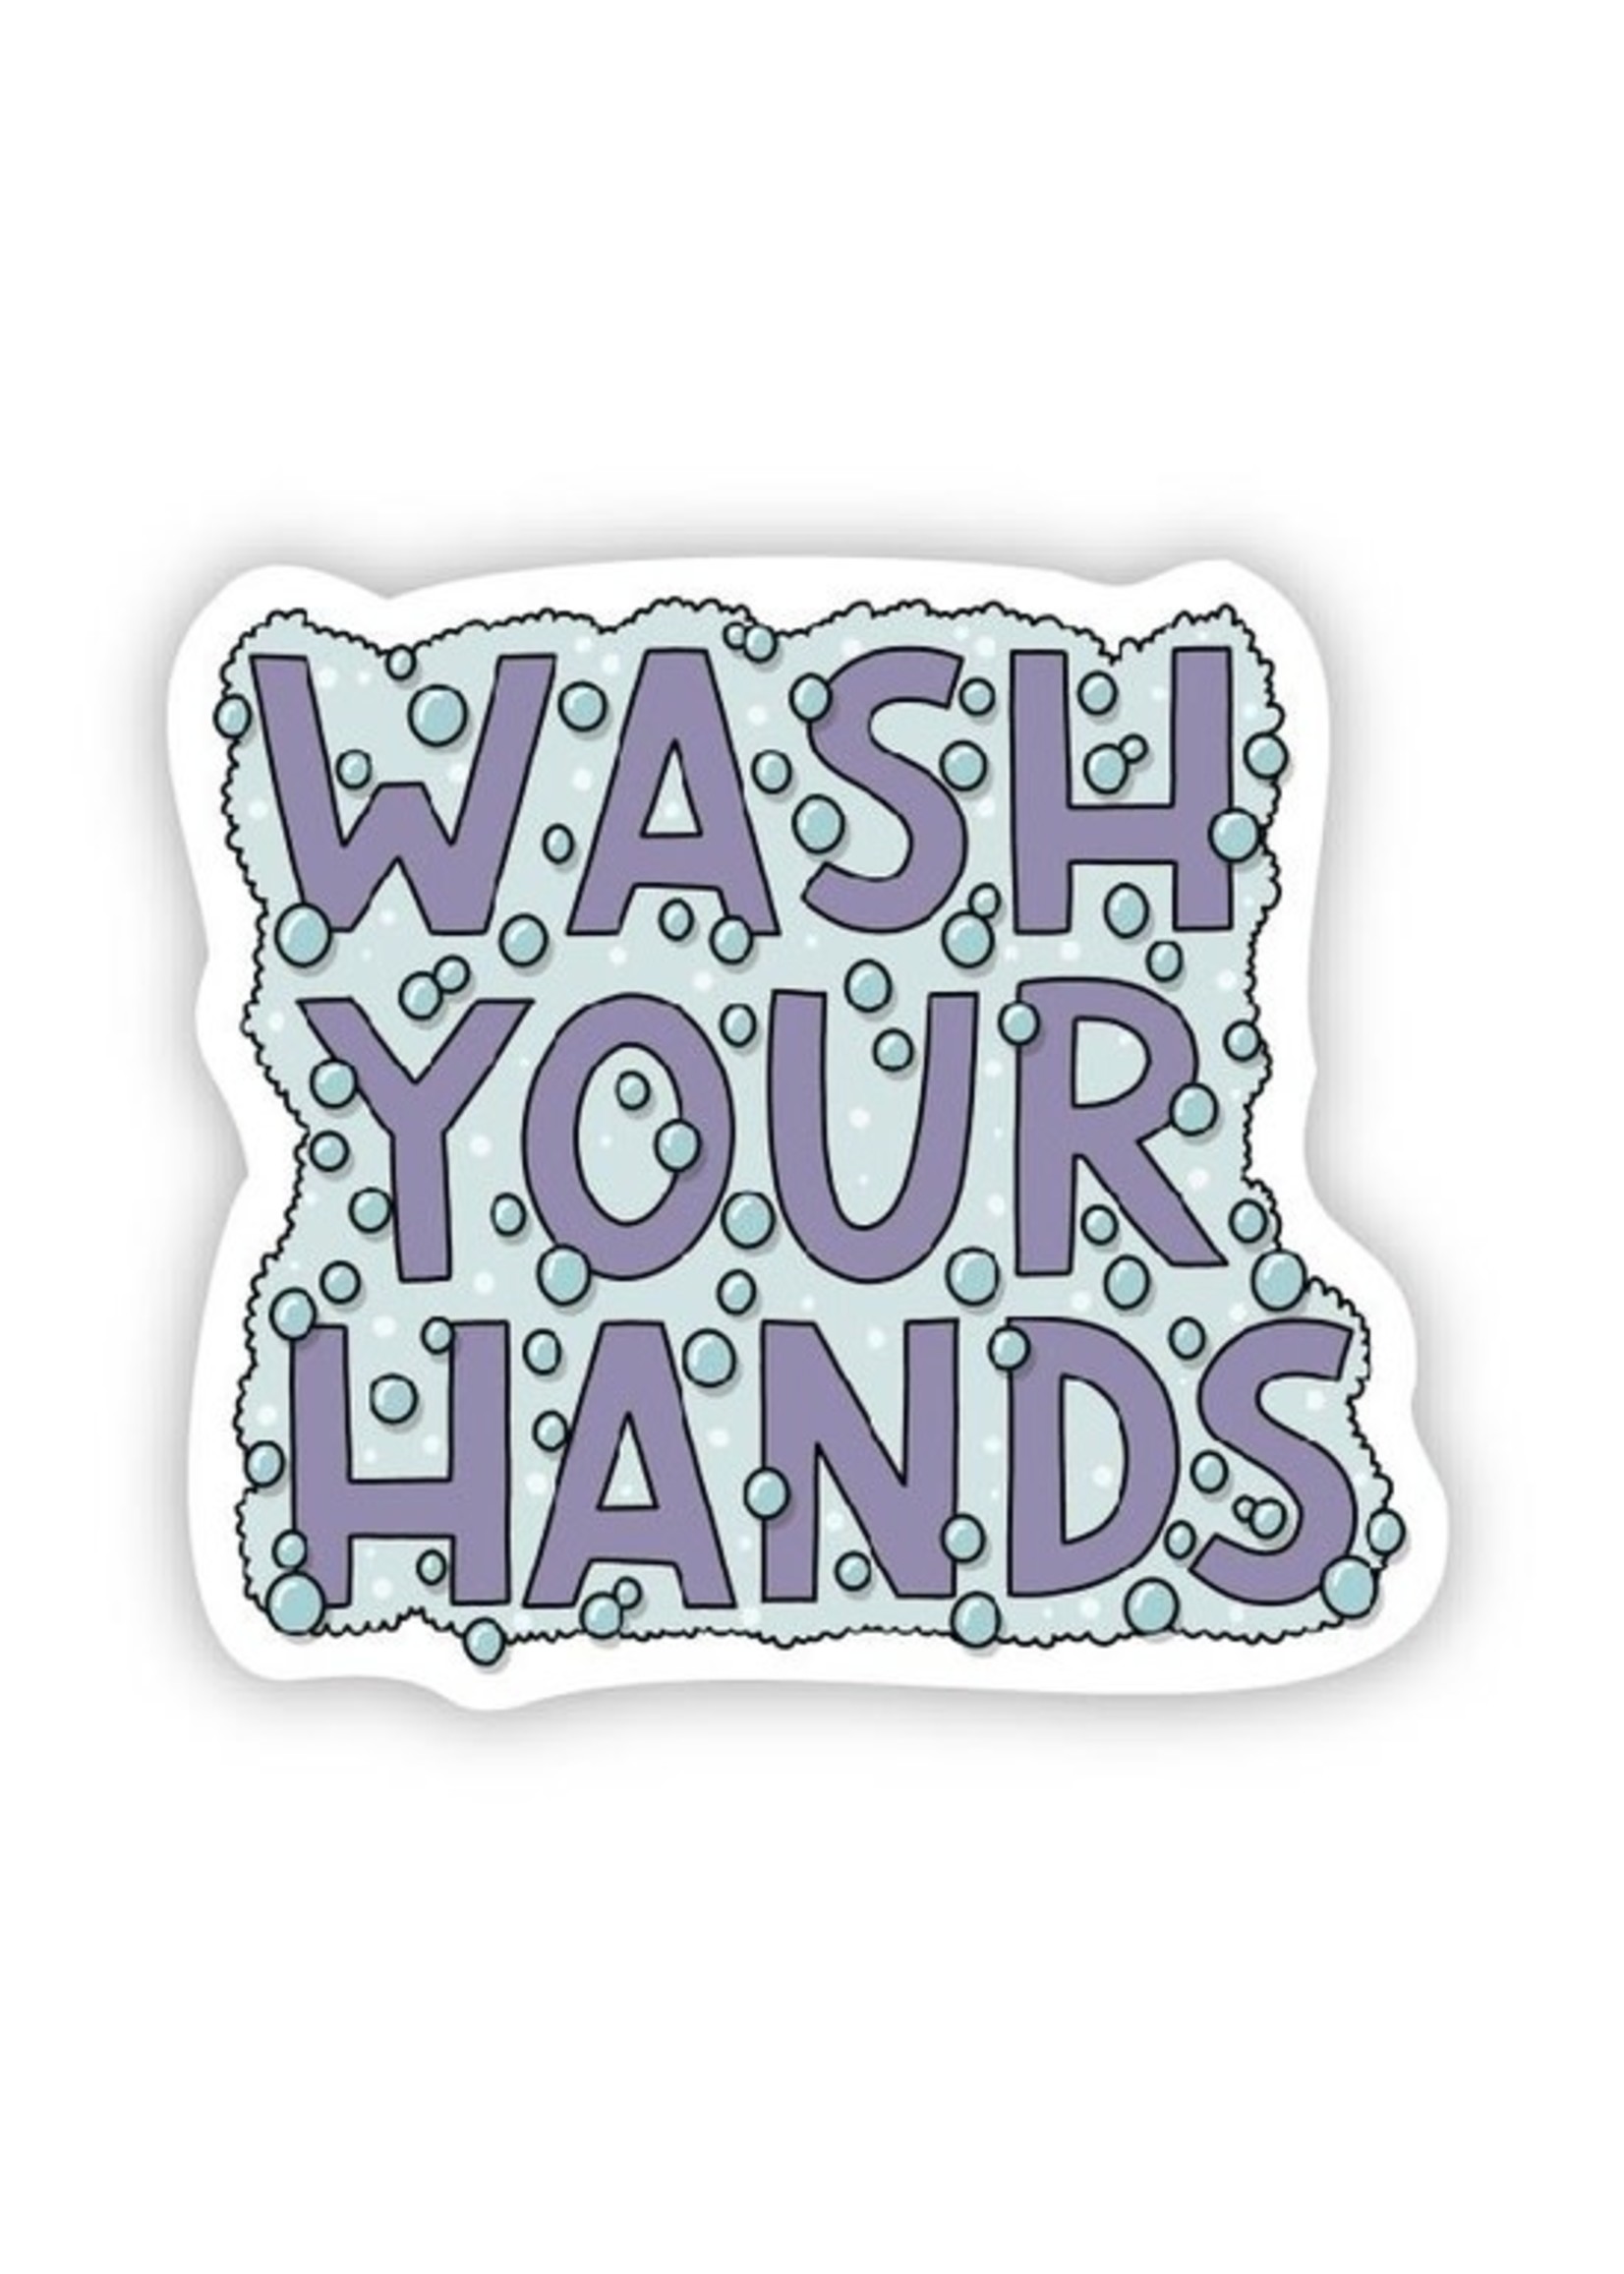 Big Moods Wash your hands sticker